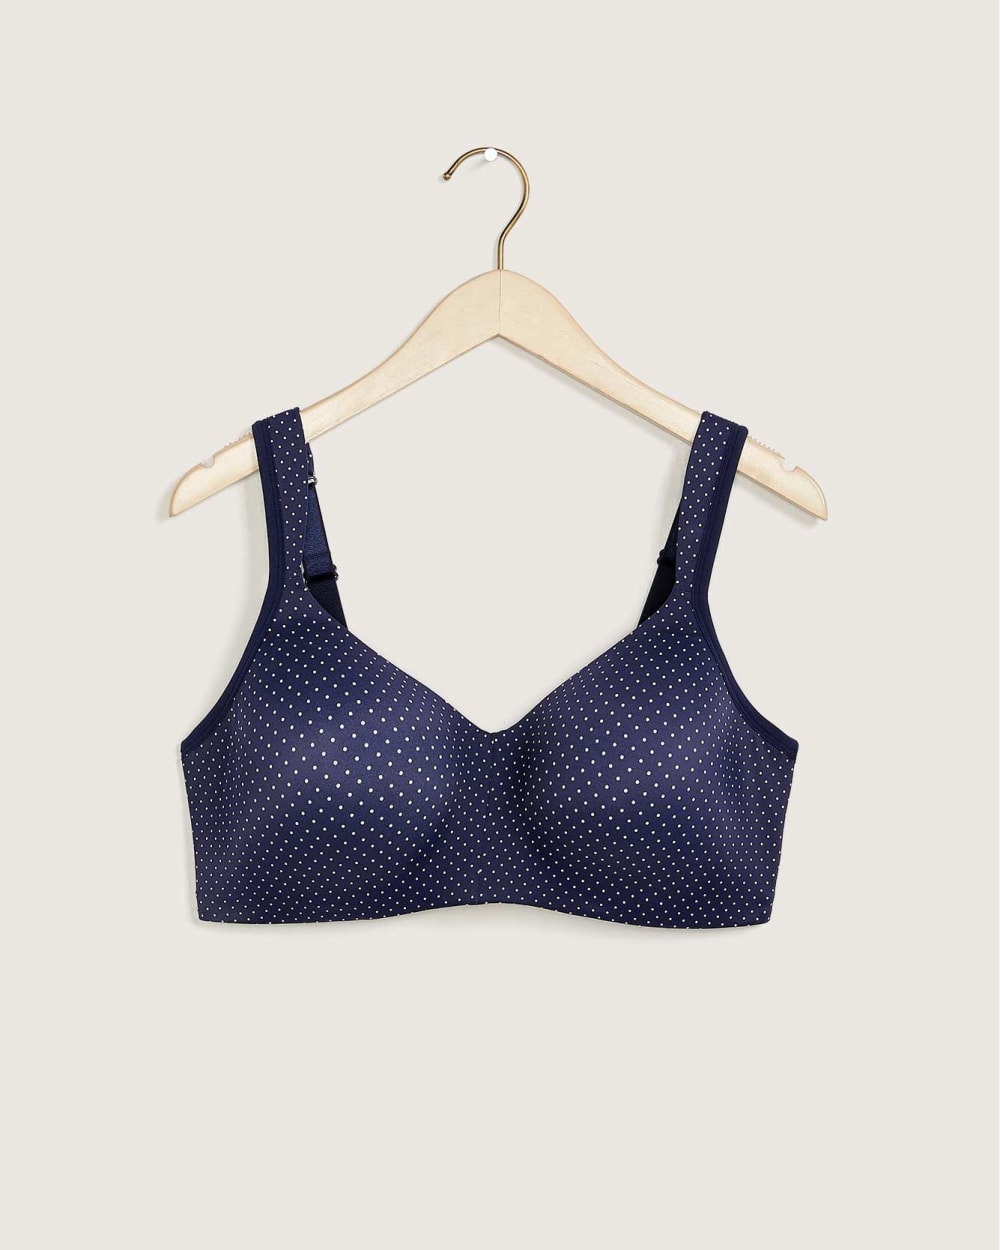 Mini Market - Beautiful plus size bra Brand - body flirt Types - single  padded